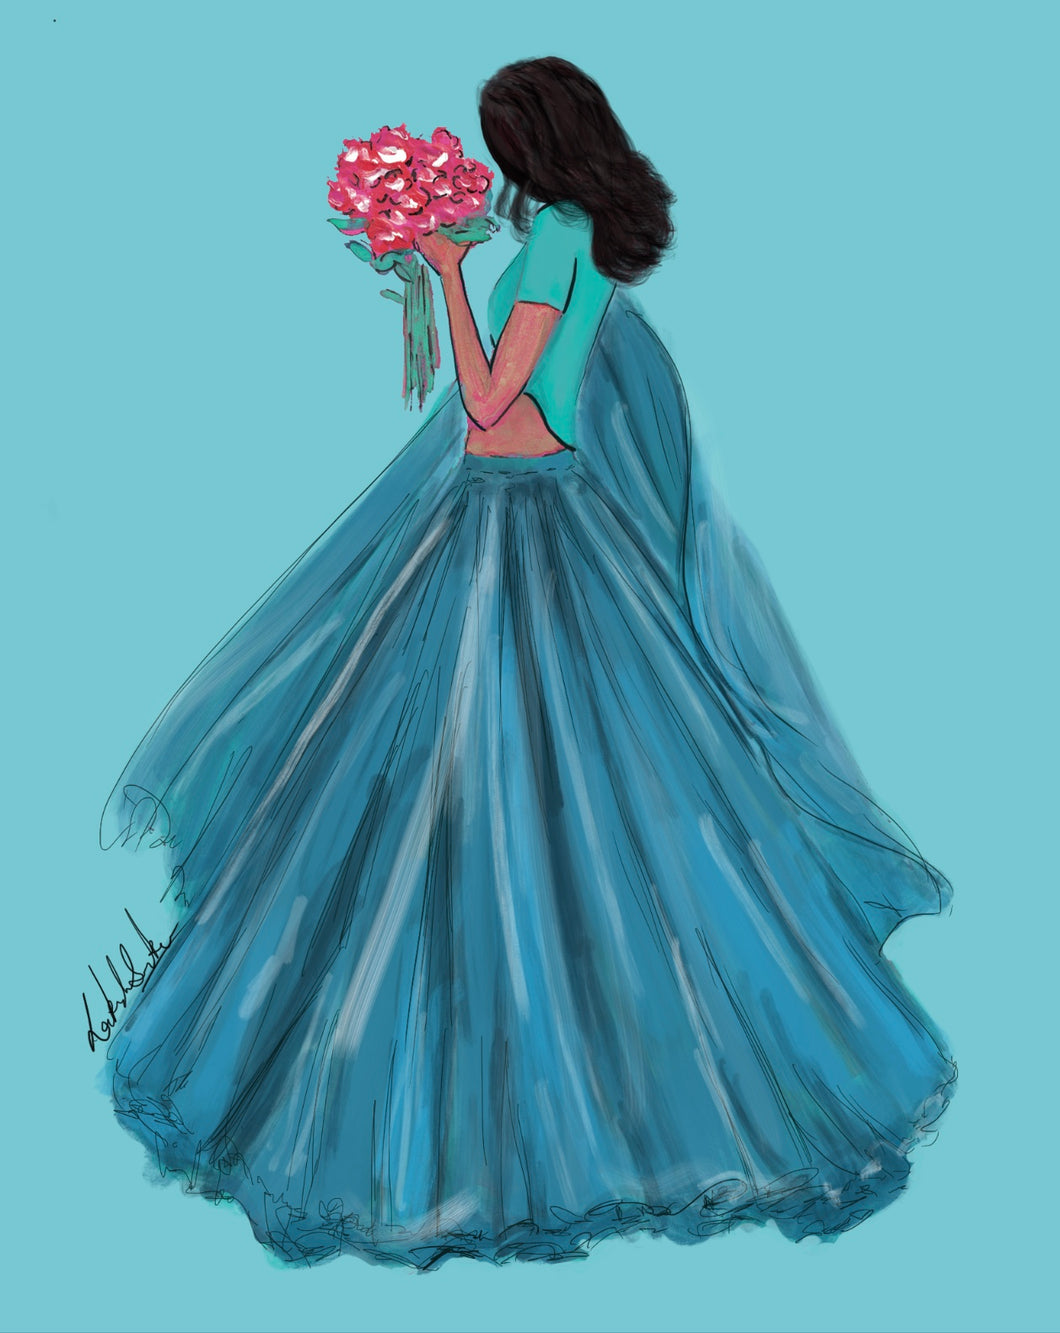 Woman in Blue Lehenga holding Flowers - Bridesmaid , springtime